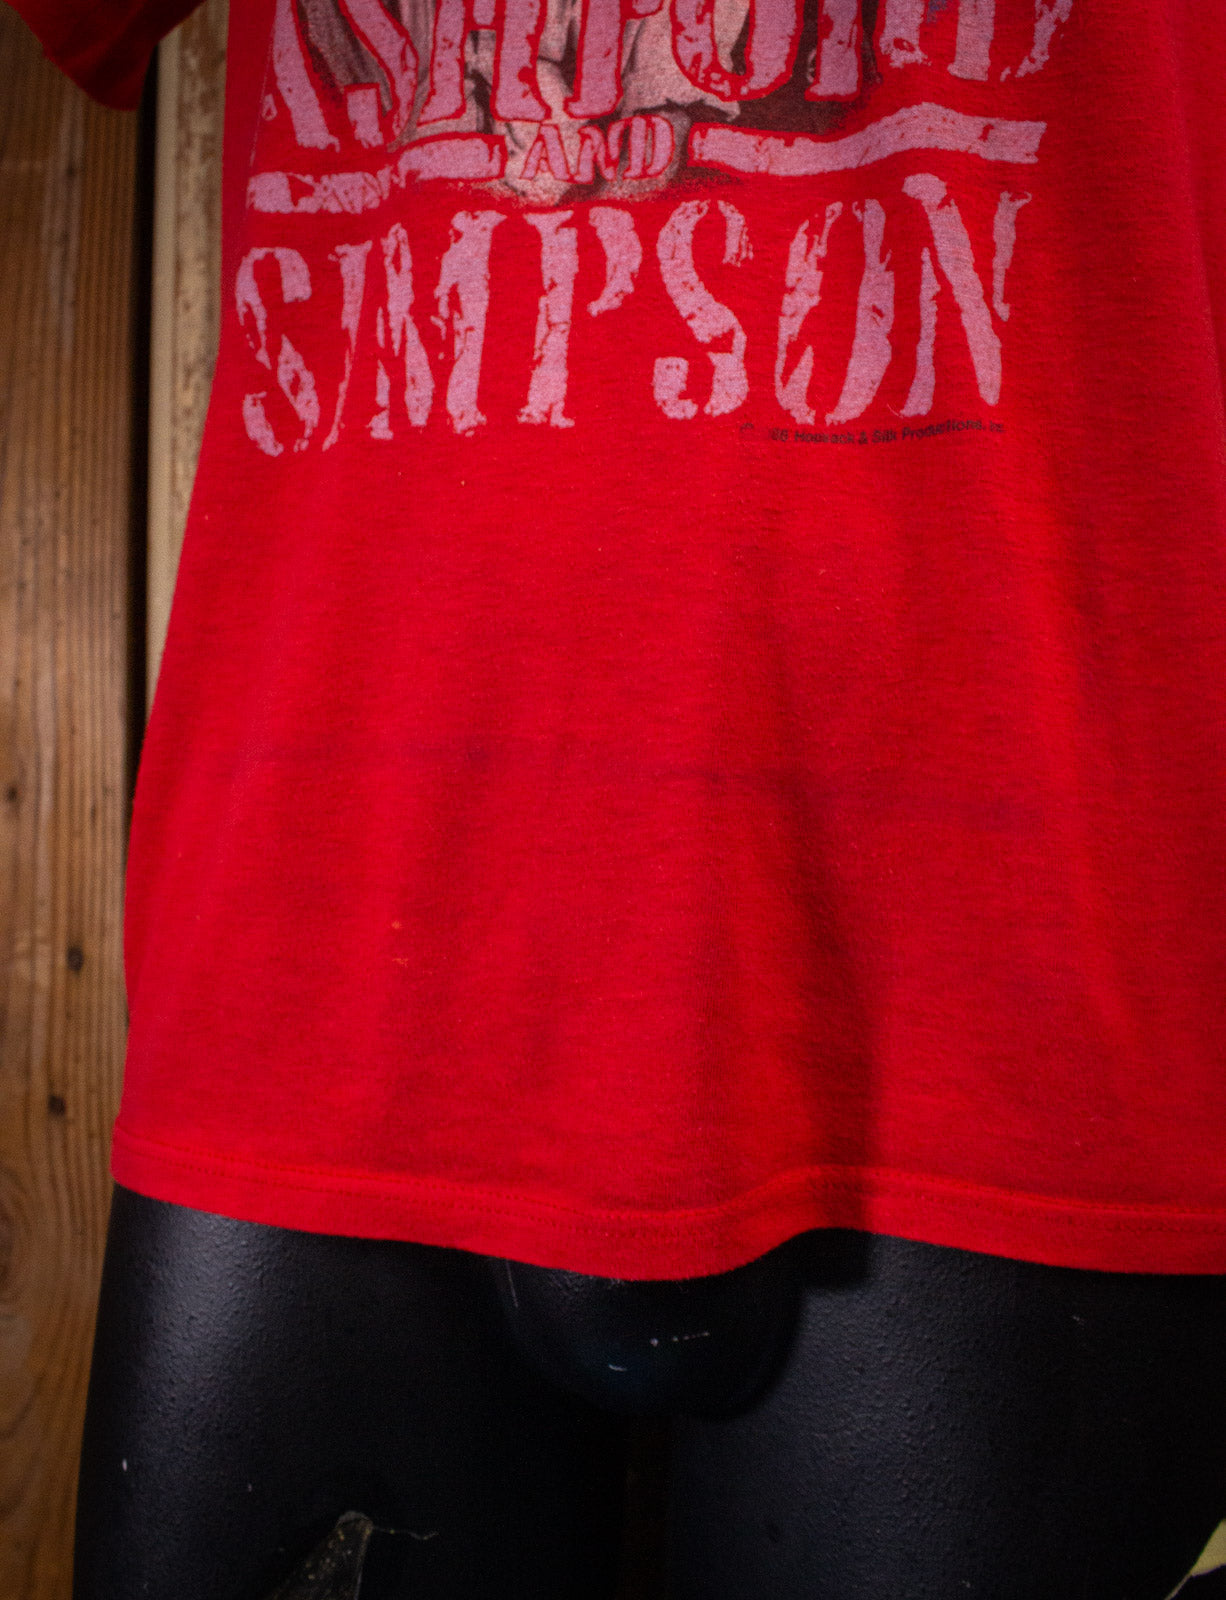 Vintage Ashford and Simpson Real Love Concert T Shirt 1986 Red Medium